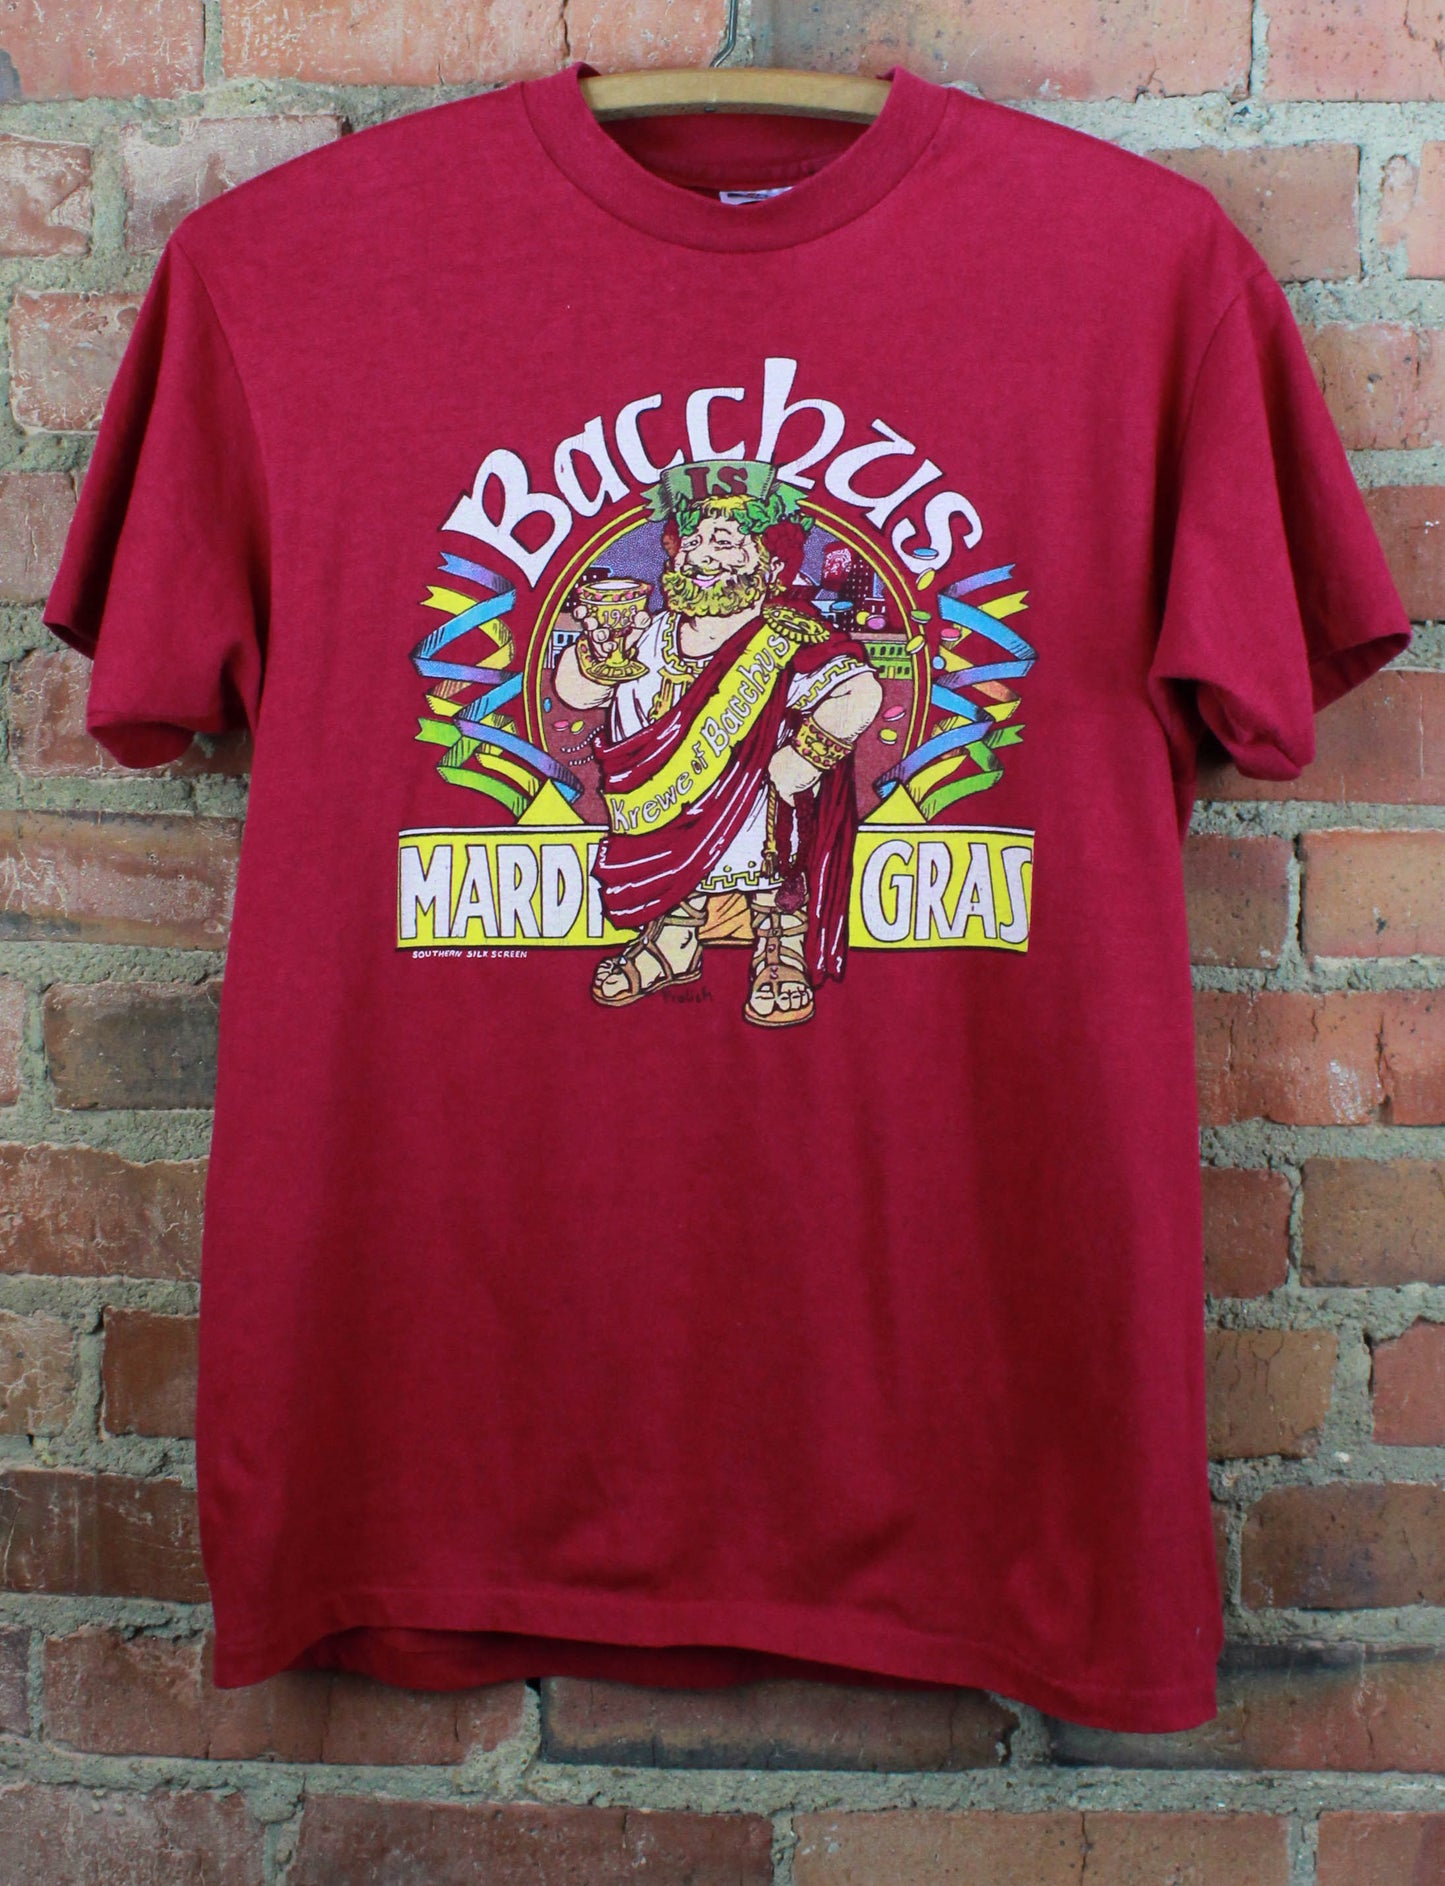 Vintage 80's Bacchus Mardi Gras Graphic T Shirt Fuchsia Unisex Medium